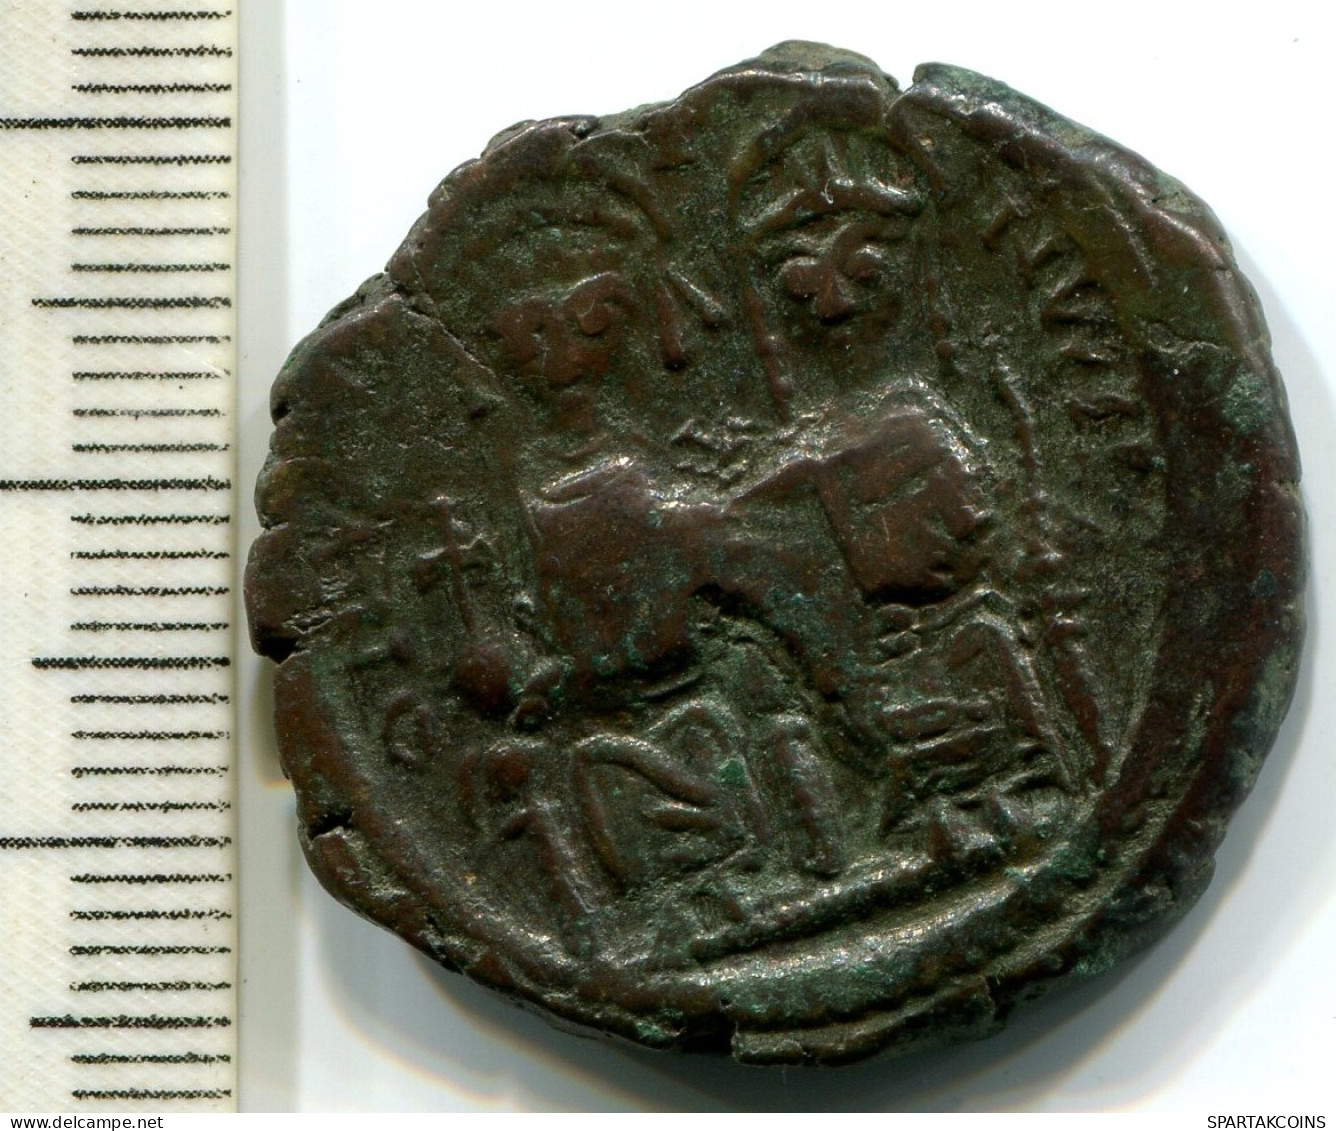 JUSTINII And SOPHIA AE Follis Thessalonica 527AD Large M NIKO #ANC12432.75.D.A - Byzantine